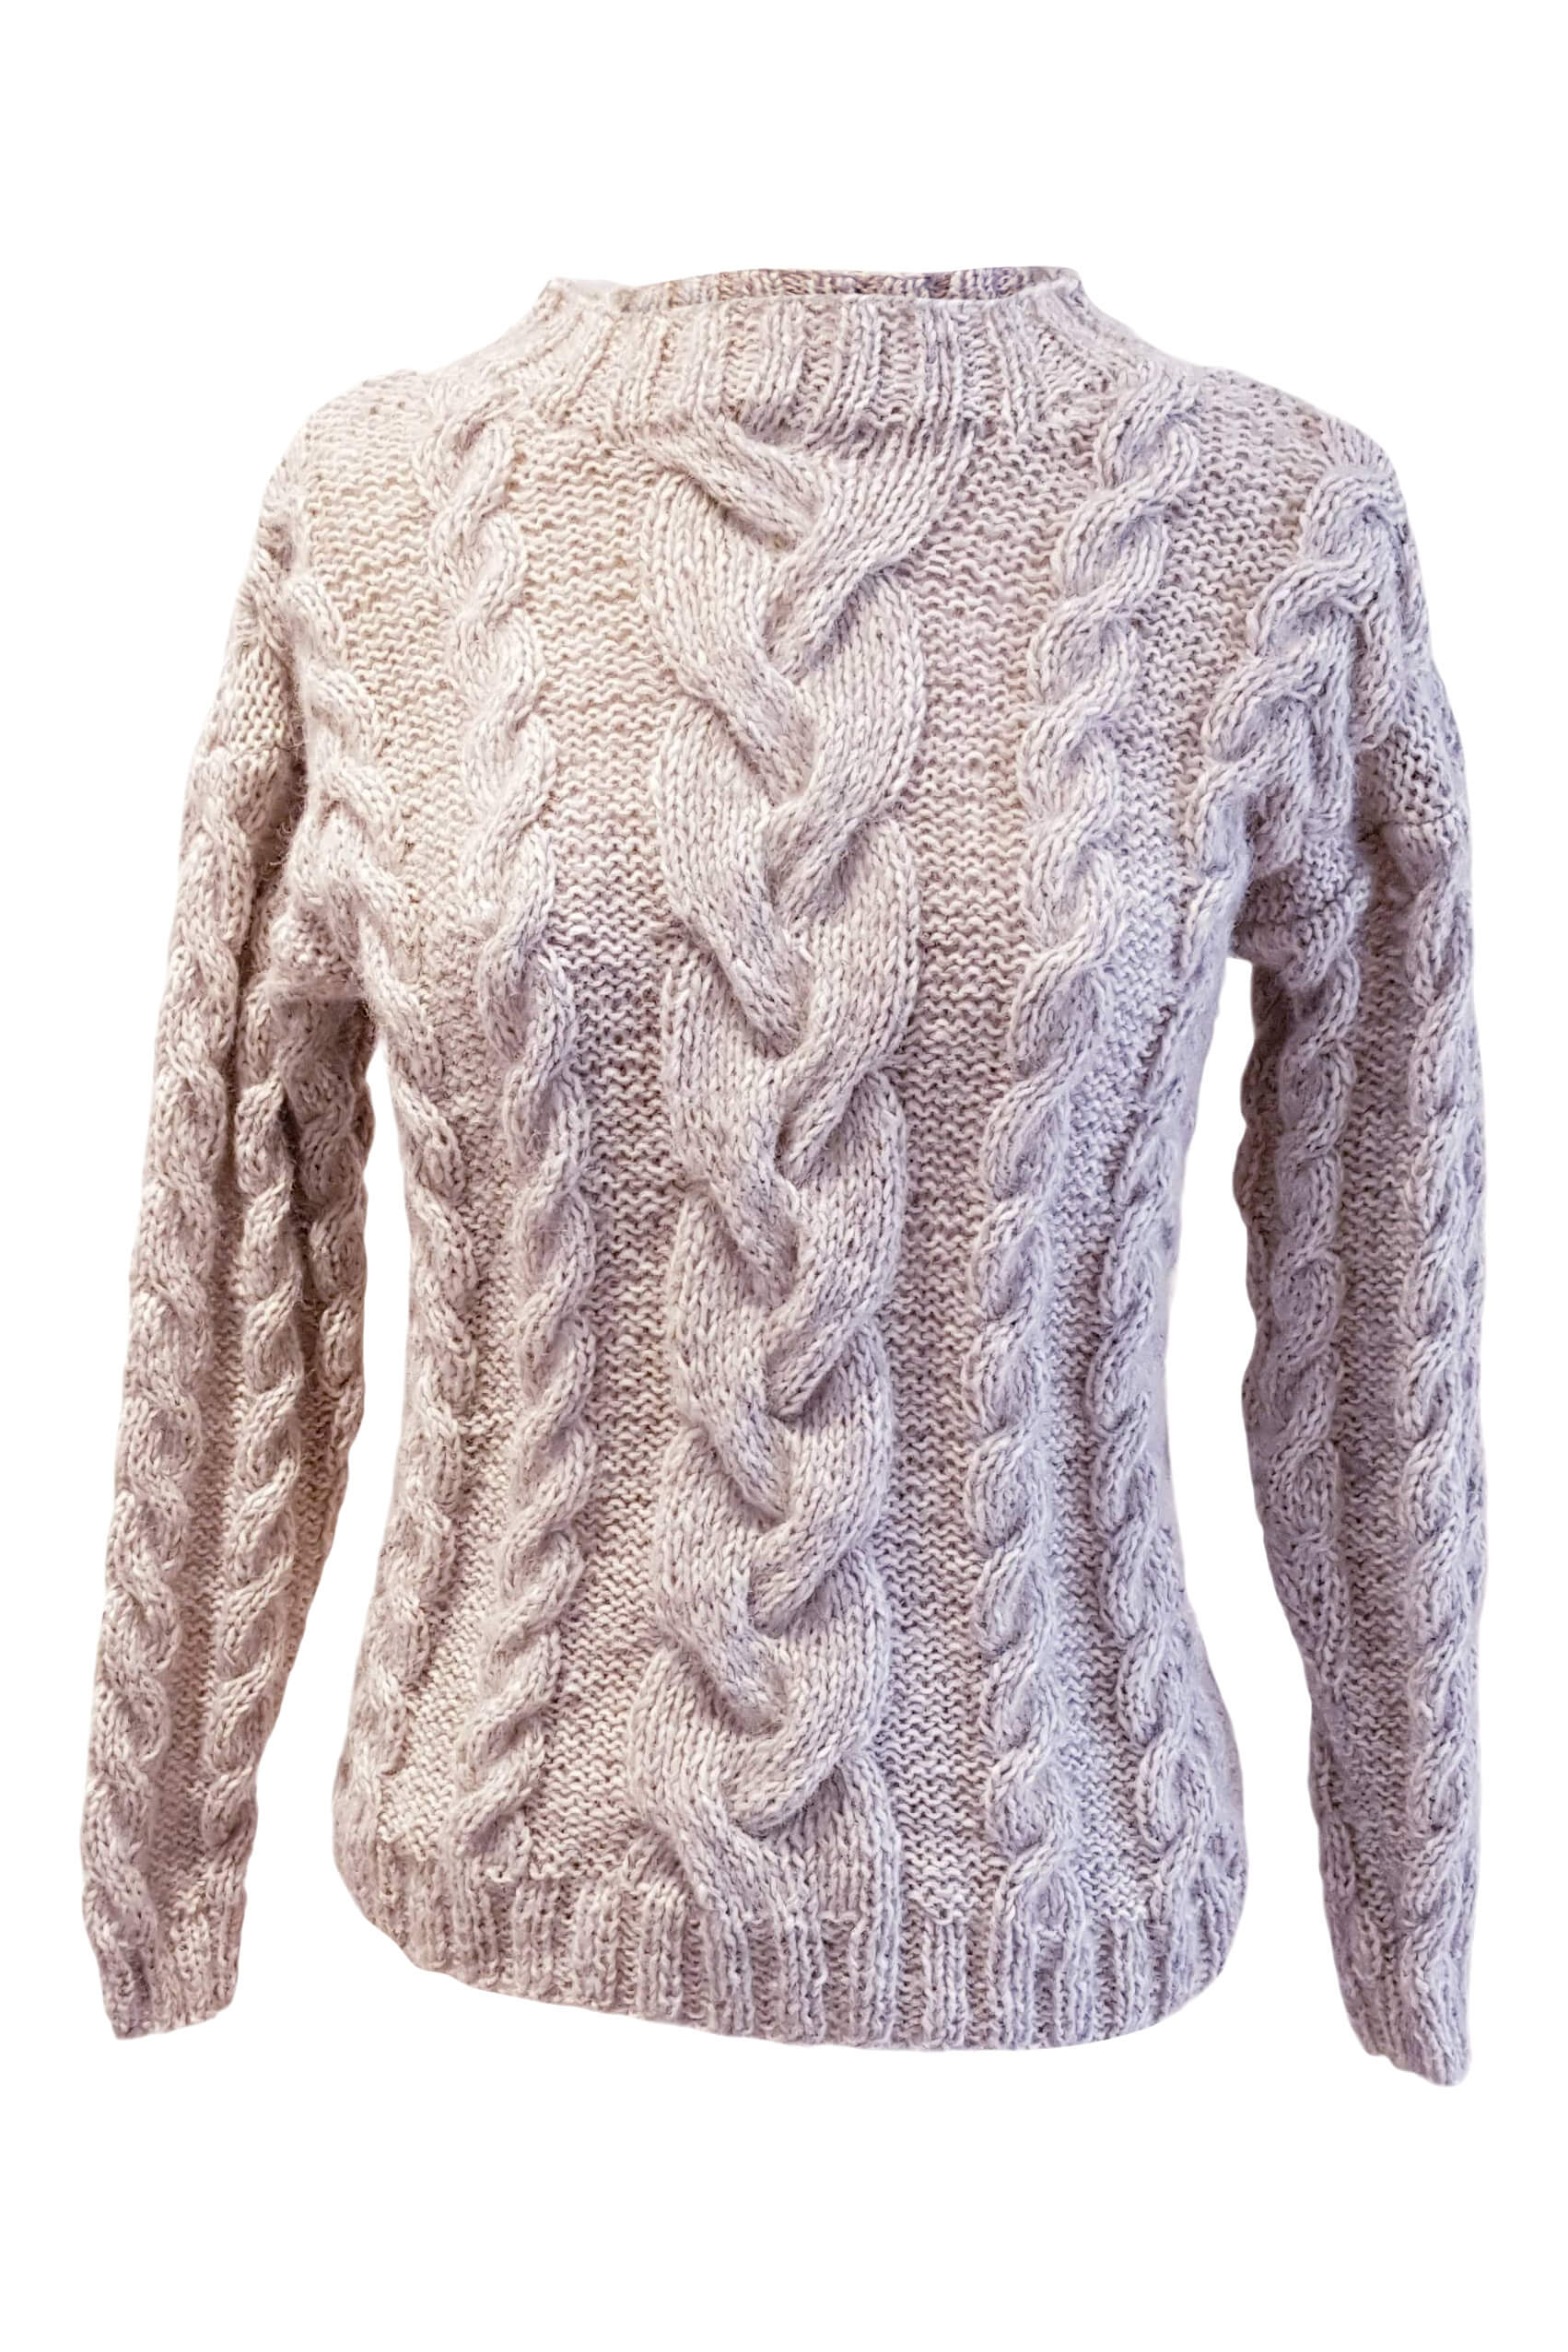 knitted Alpaca sweater